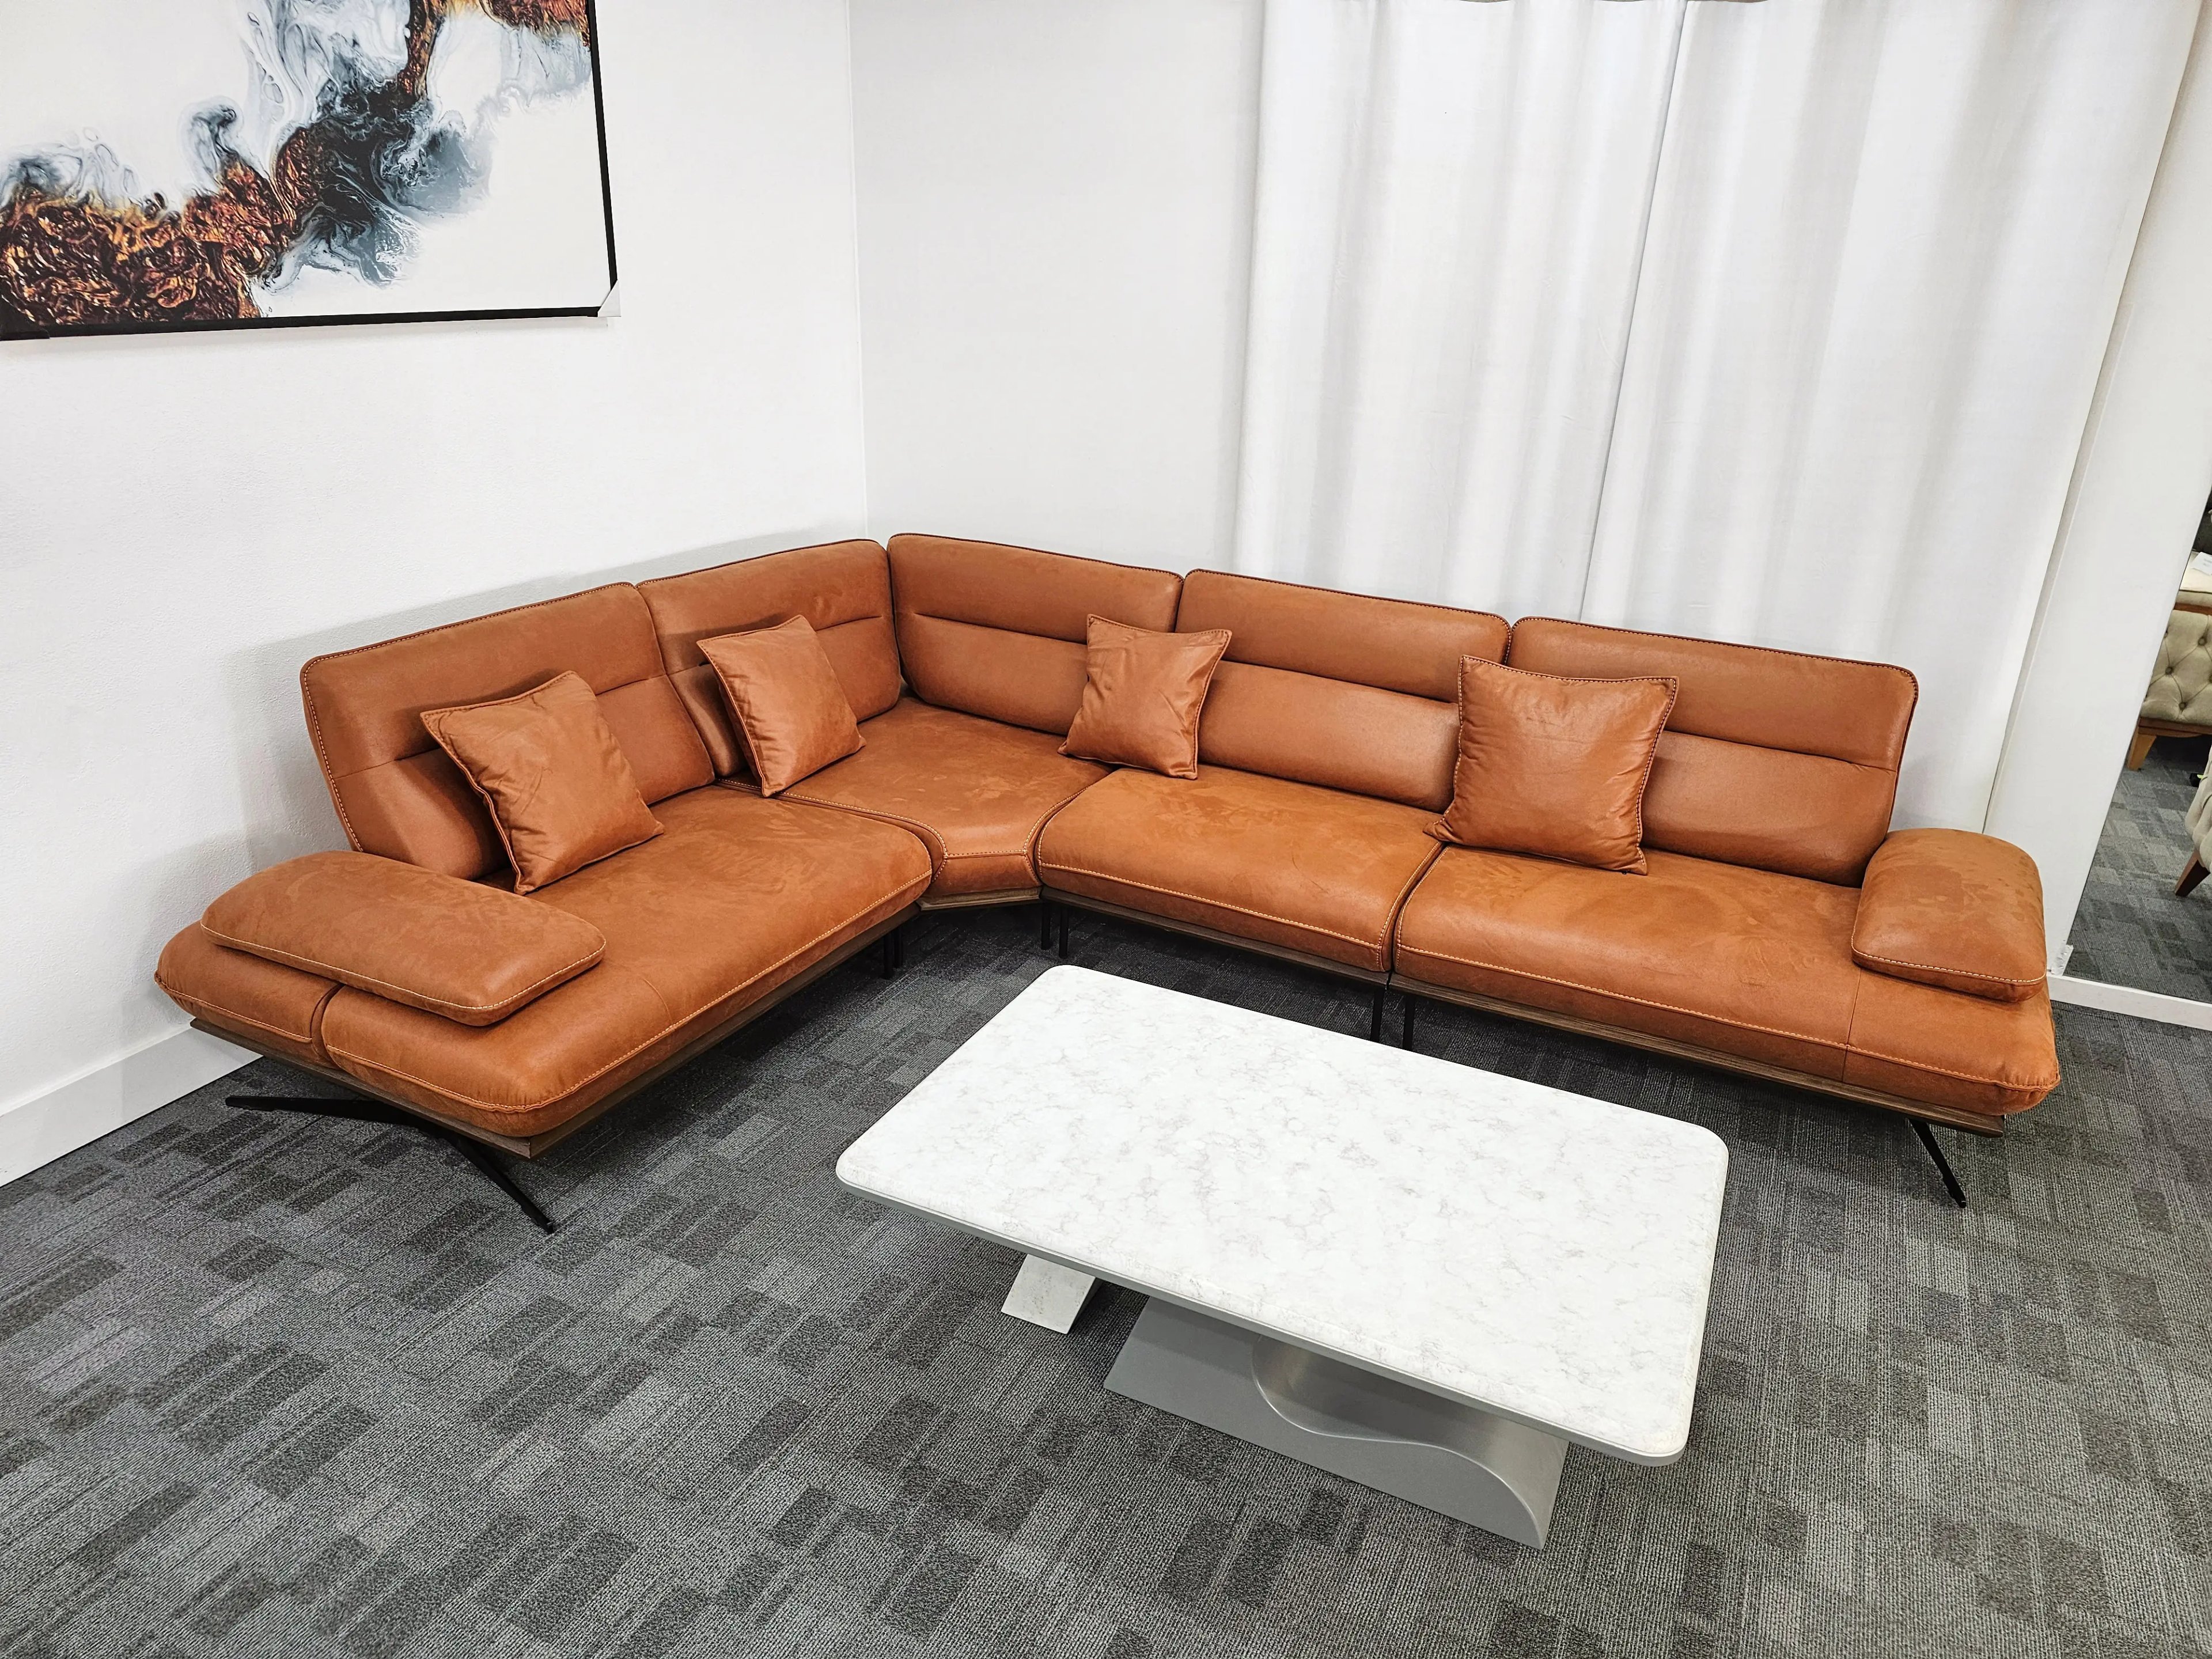 Royal- Orange Chaise Sofa Bed